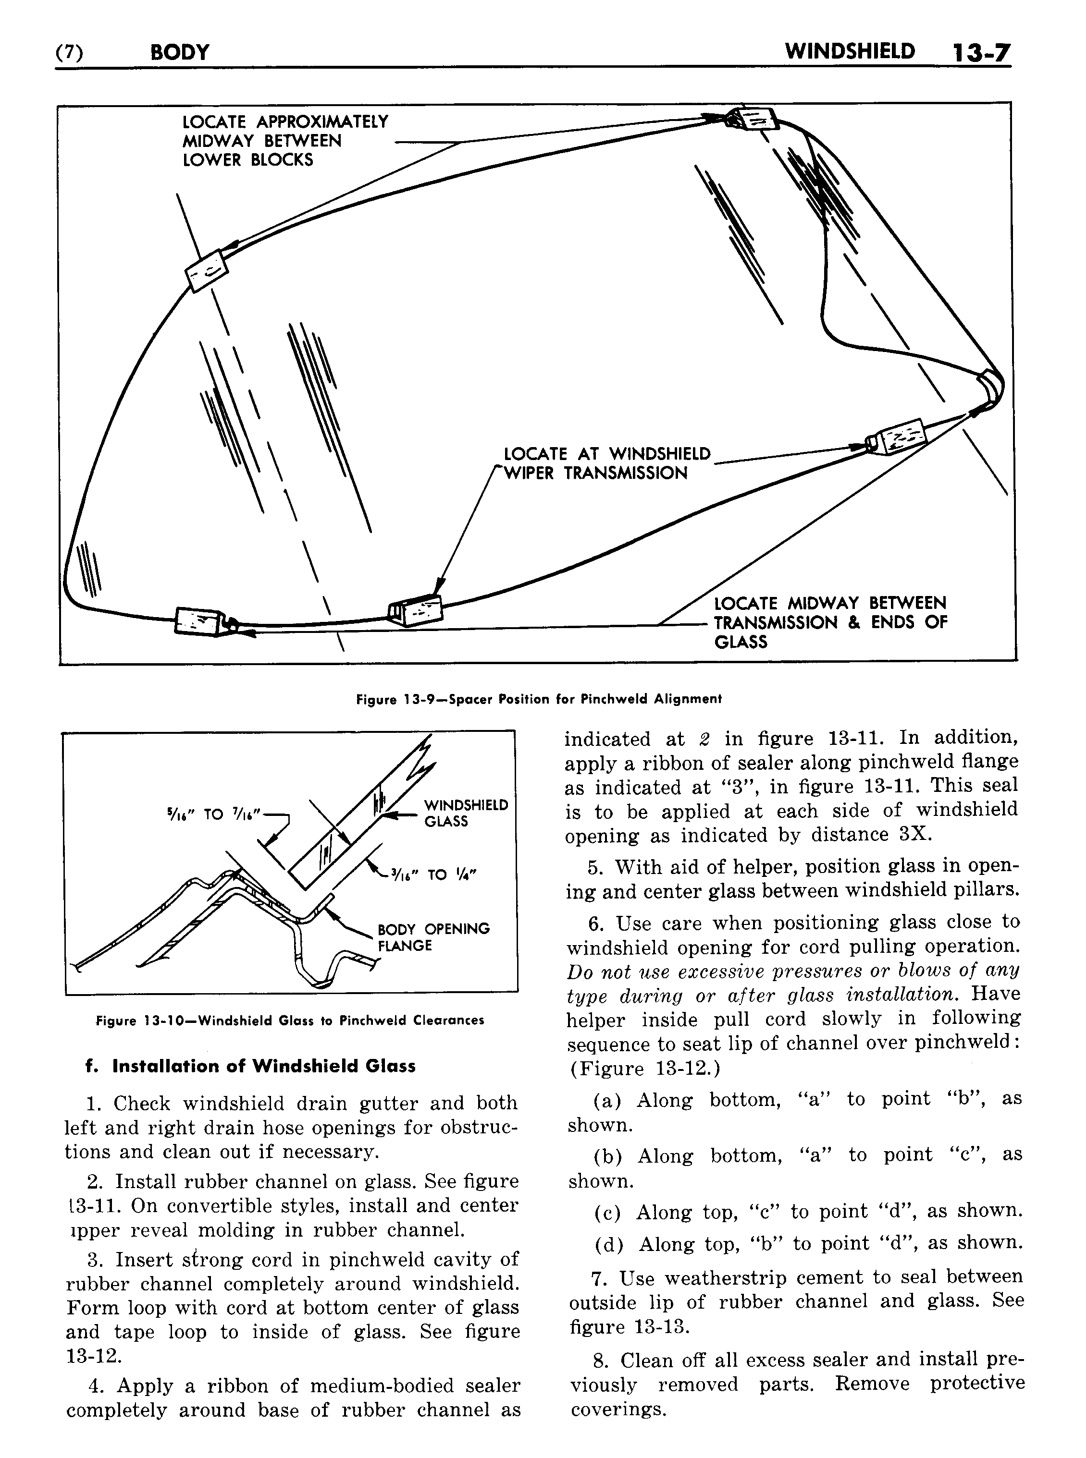 n_1957 Buick Body Service Manual-009-009.jpg